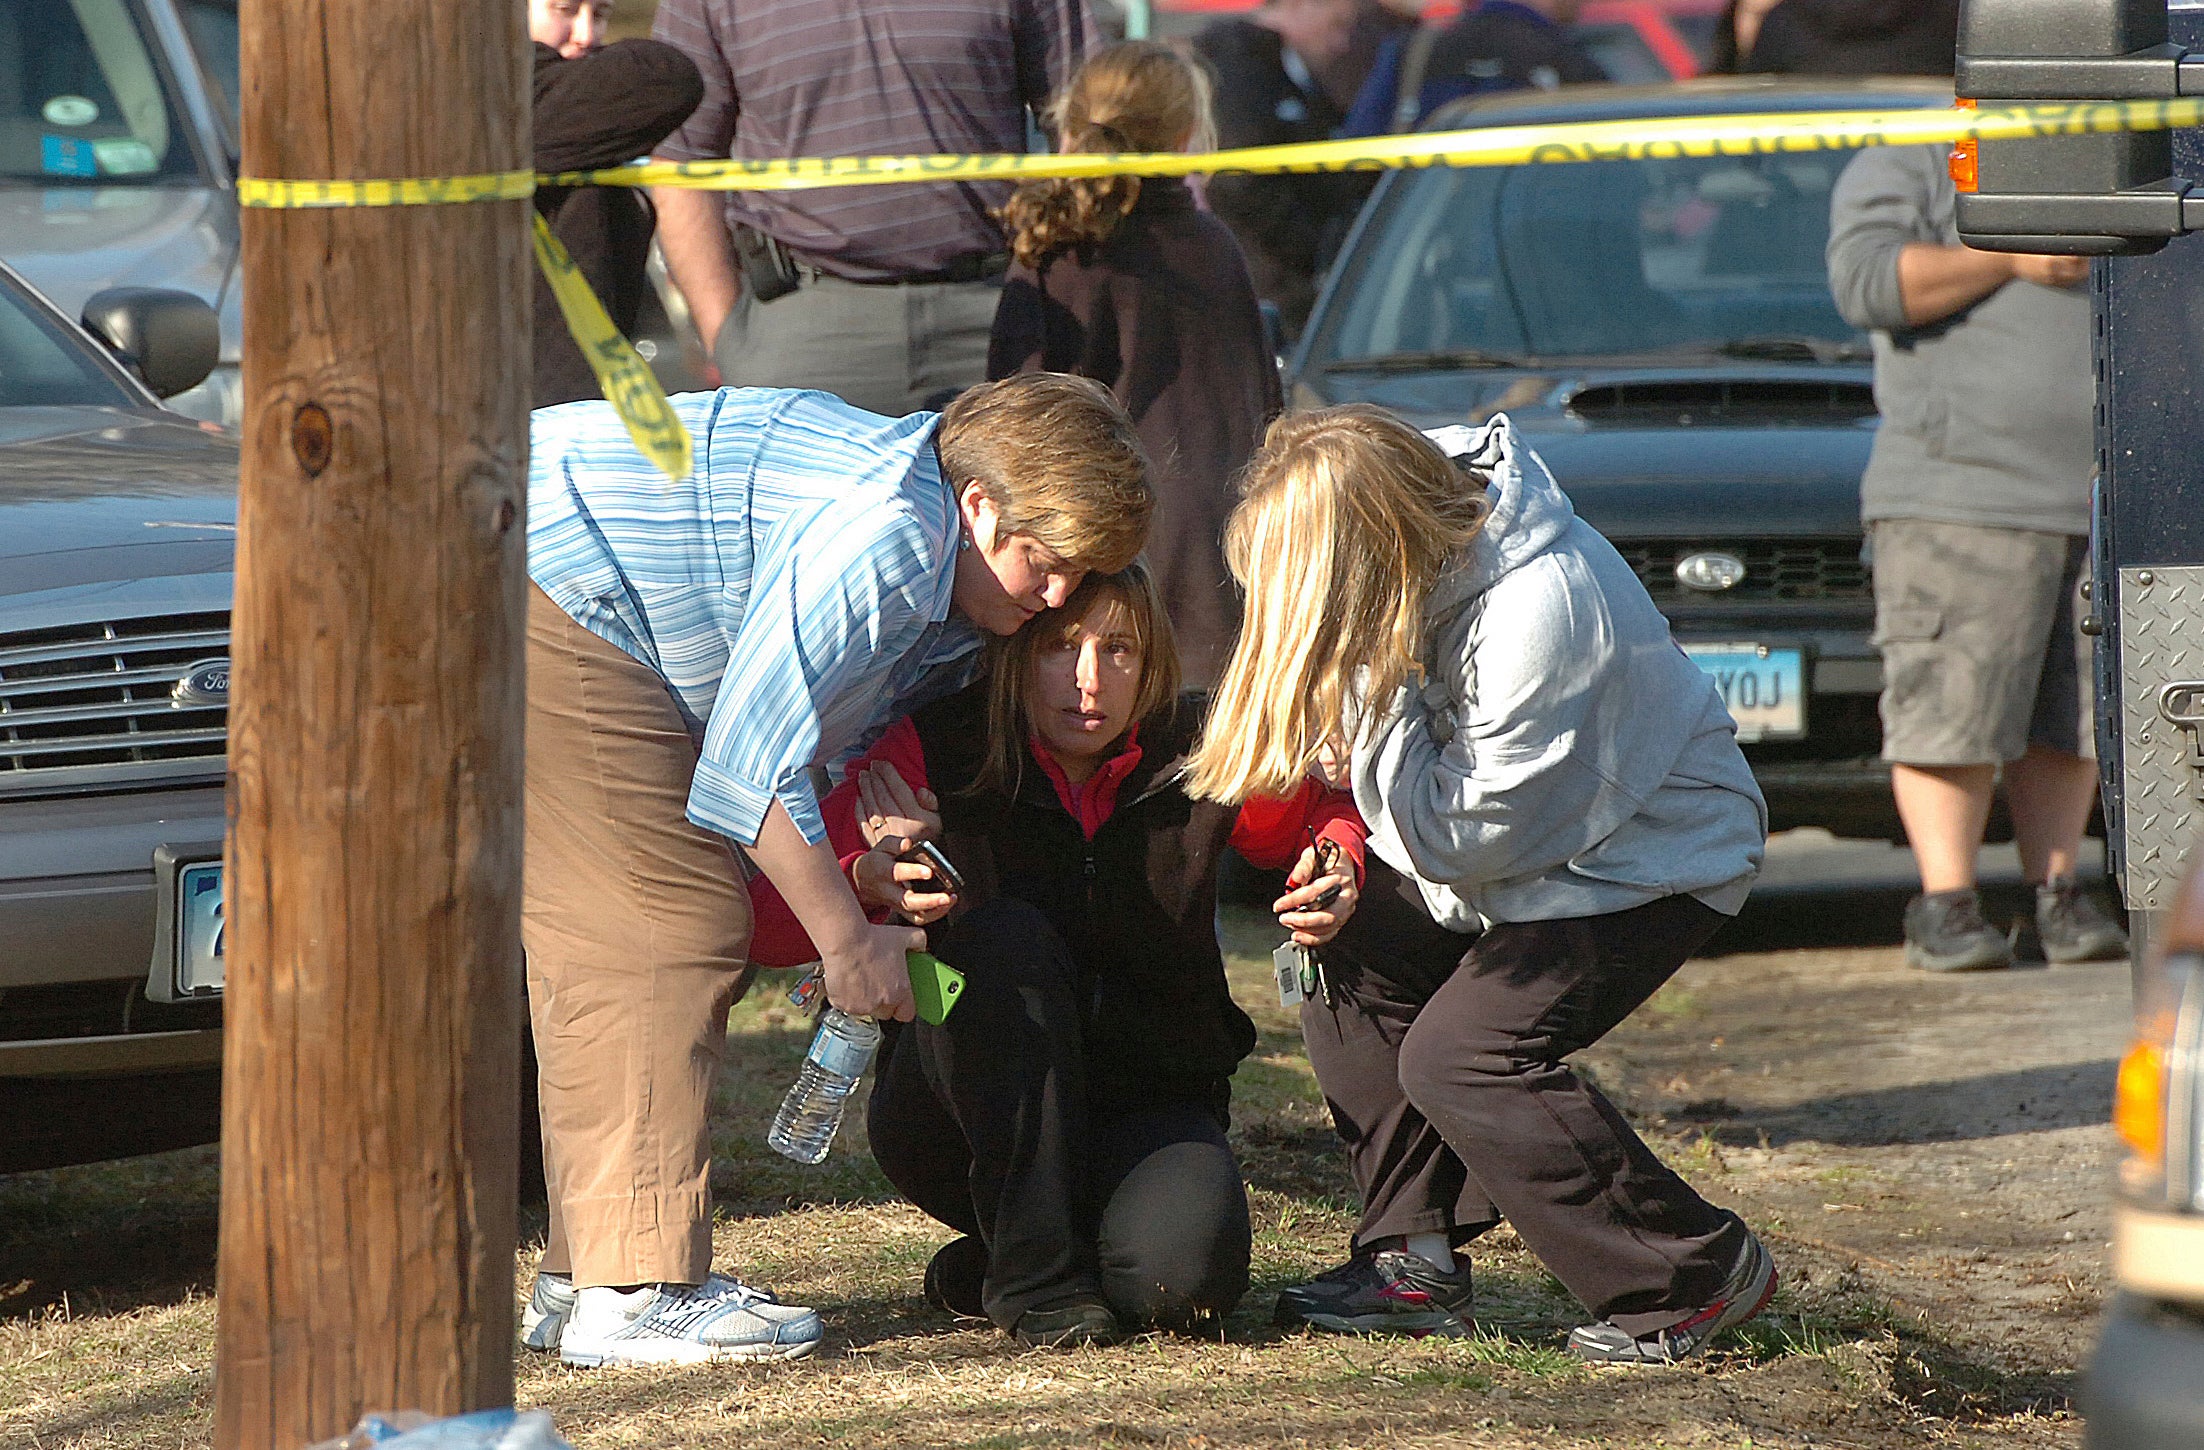 People are comforted near Sandy Hook Elementary School, Dec. 14, 2012 in Newtown, Conn